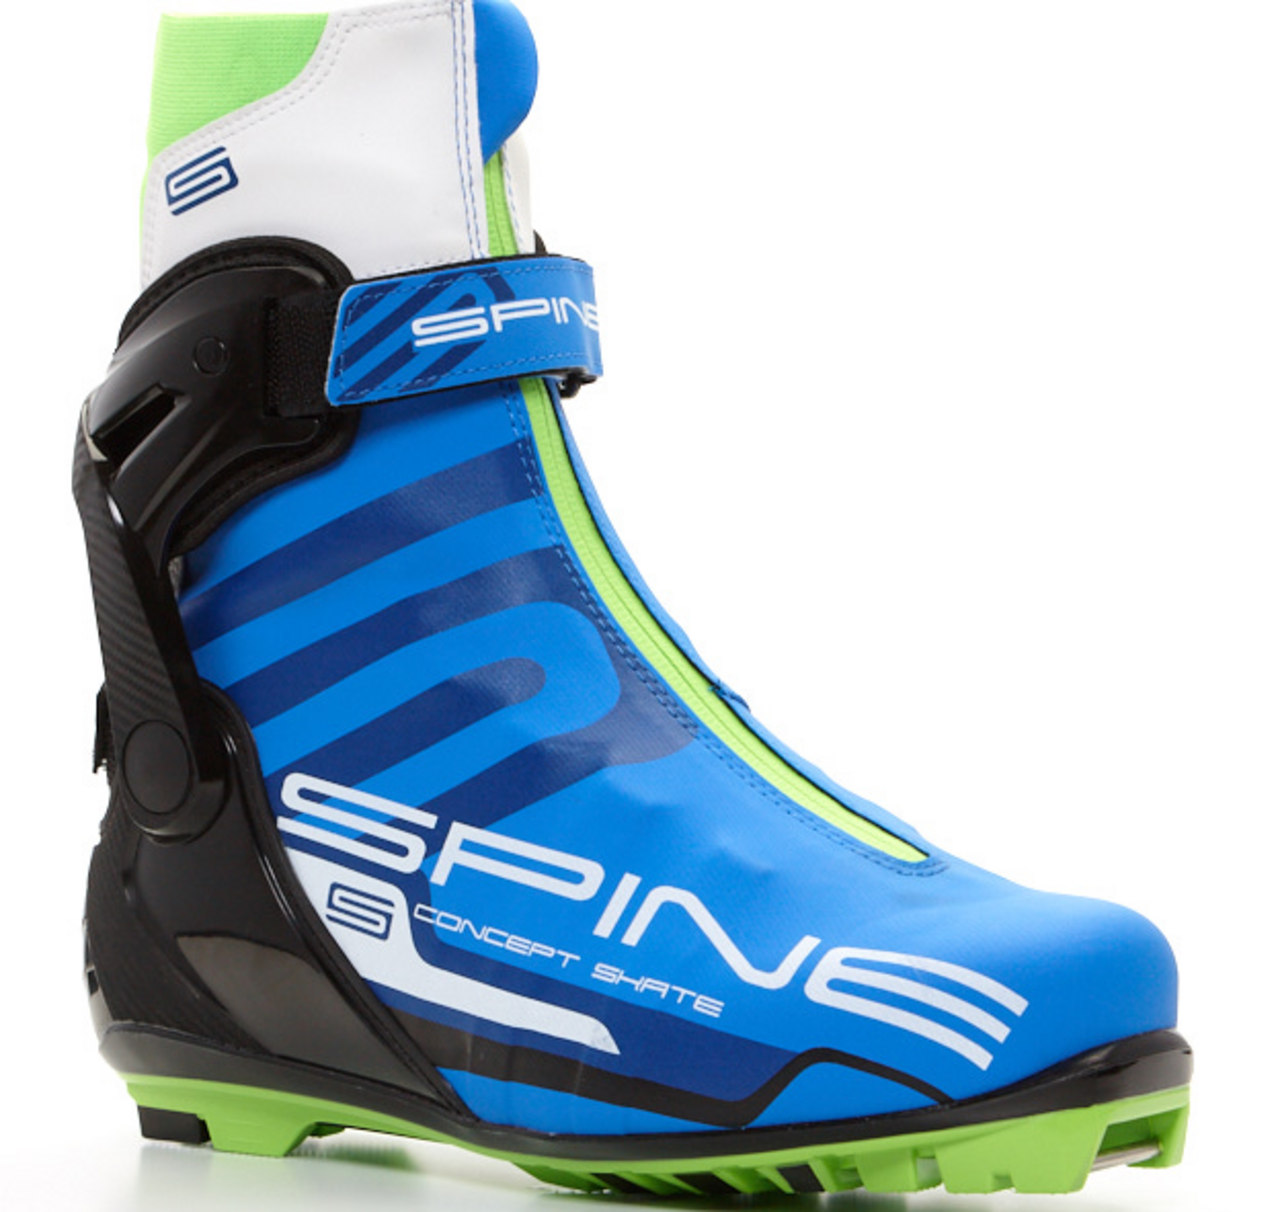 Ботинки спайн купить. Ботинки Spine NNN. Spine 297 лыжные ботинки. Ботинки Spine Ultimate Skate 599 NNN. Spine Concept Skate Pro 297.